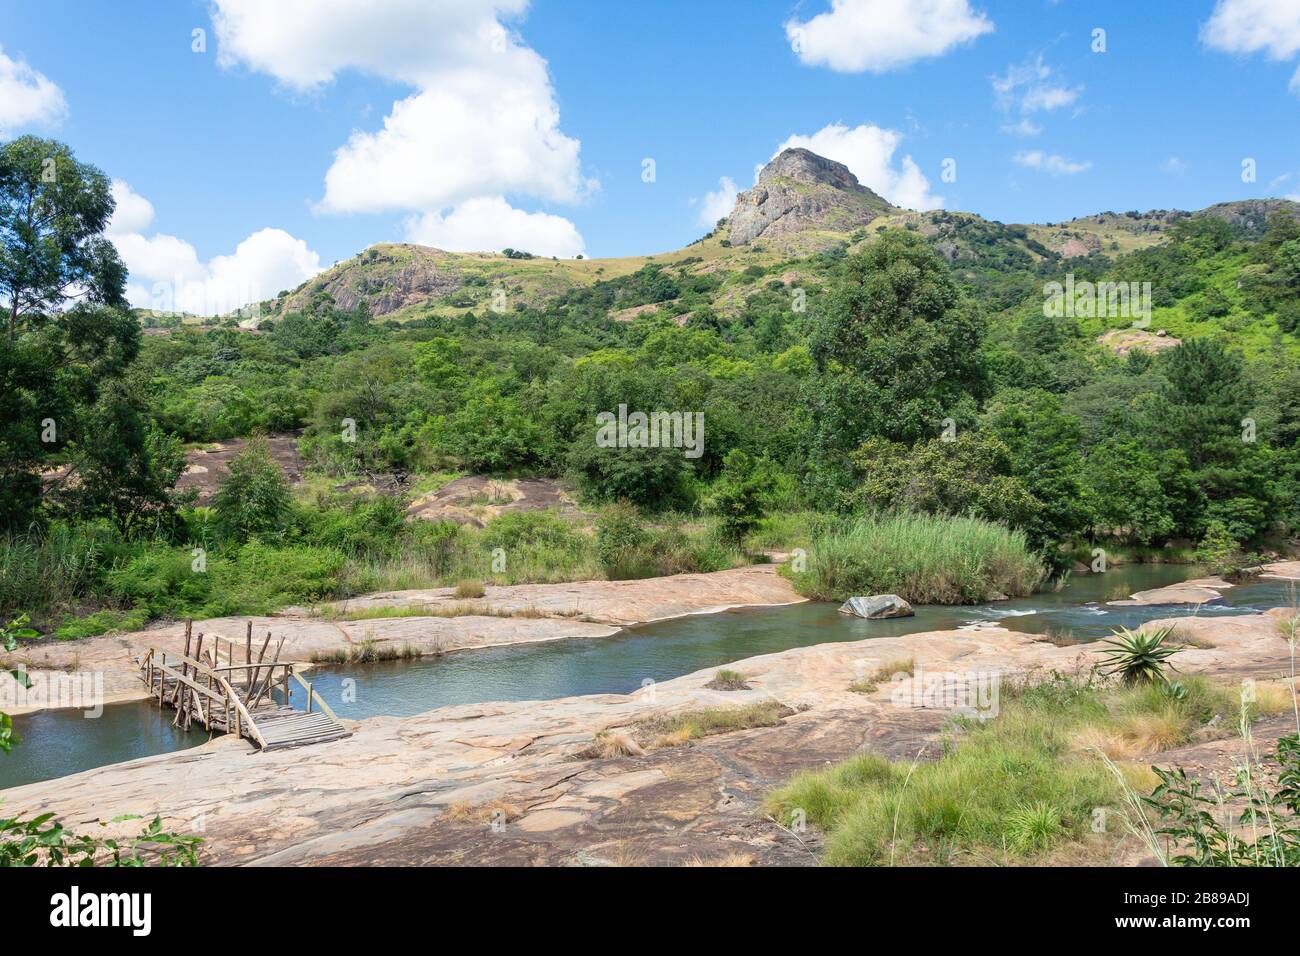 Mountain landscape and Lusushwana River at Mantenga Nature Reserve, Lobamba, Ezulwini Valley, Hhohho Region, Kingdom of Eswatini (Swaziland) Stock Photo